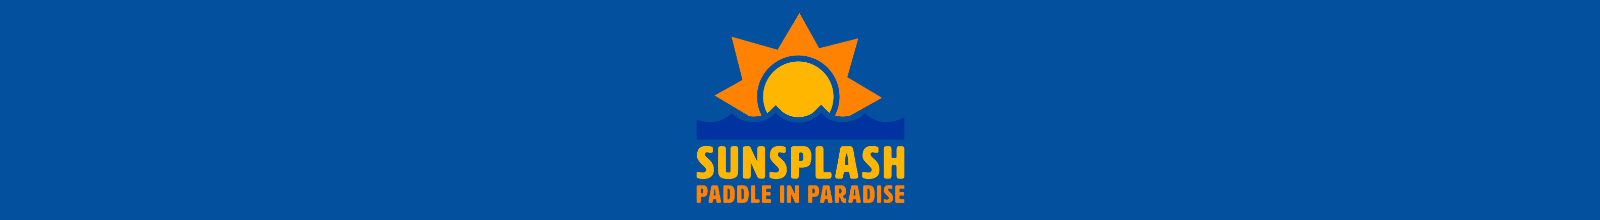 SunSplash Banner